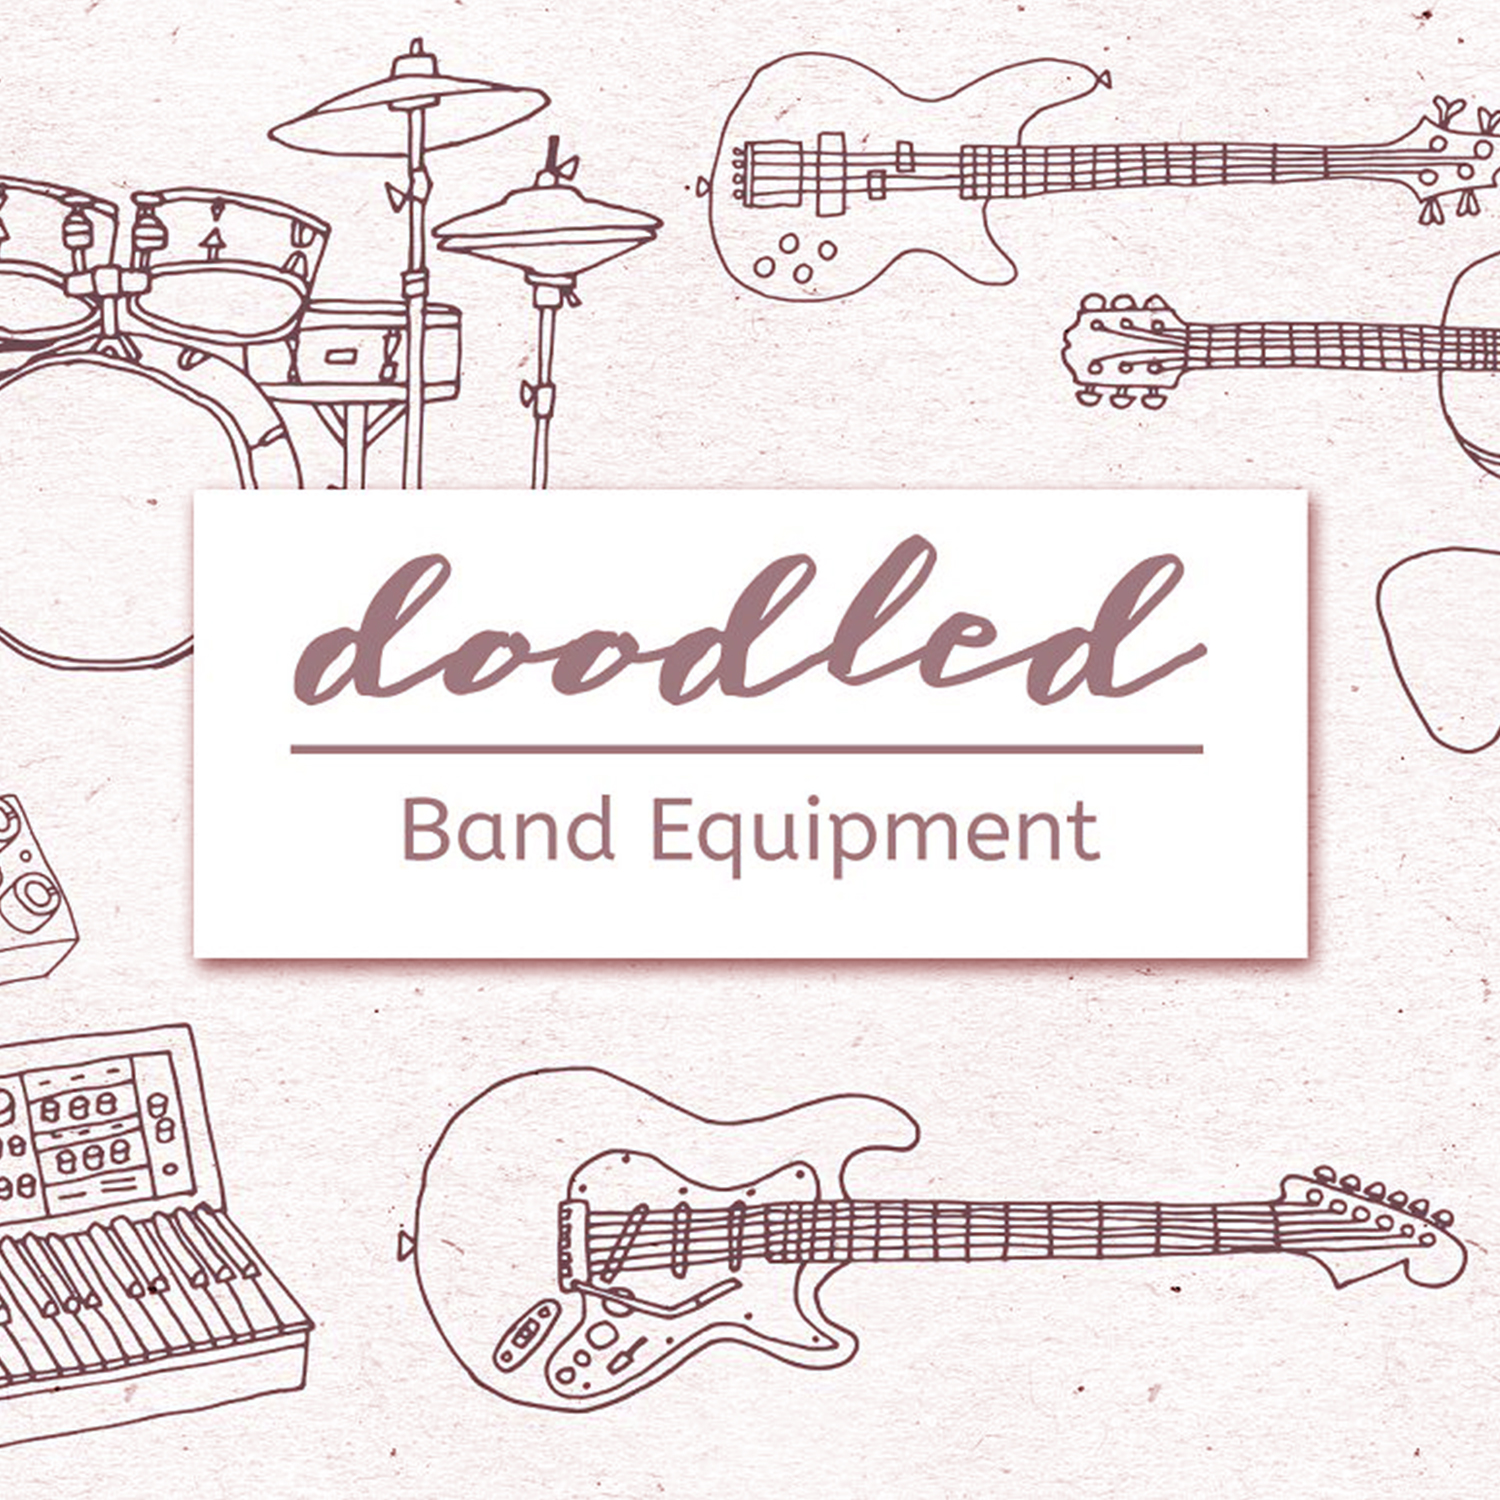 Doodled Rock Band Equipment Graphics.